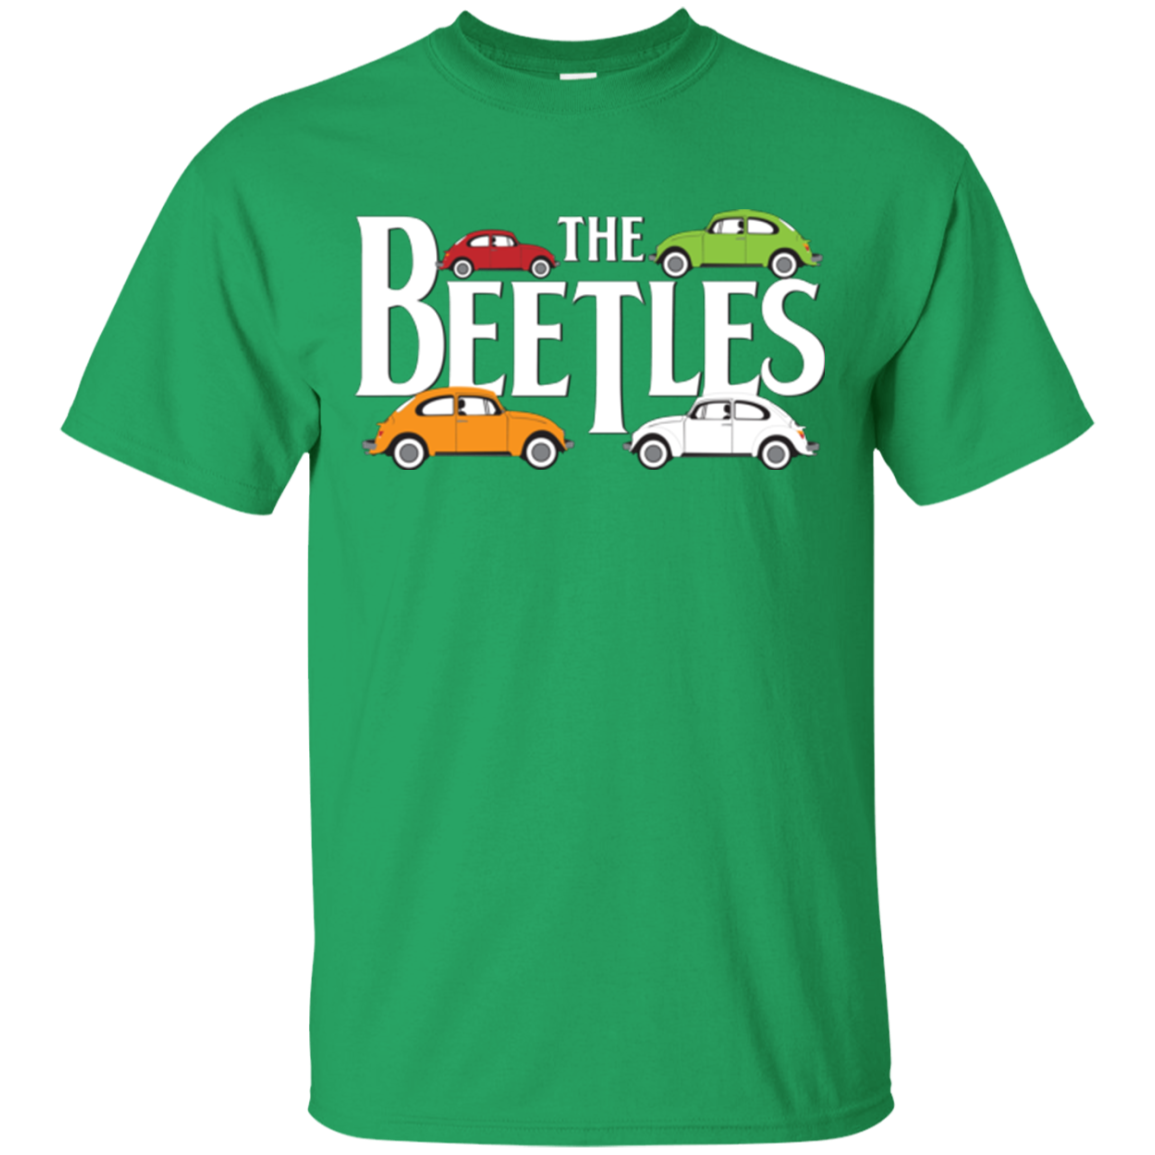 The Beetles T-Shirt